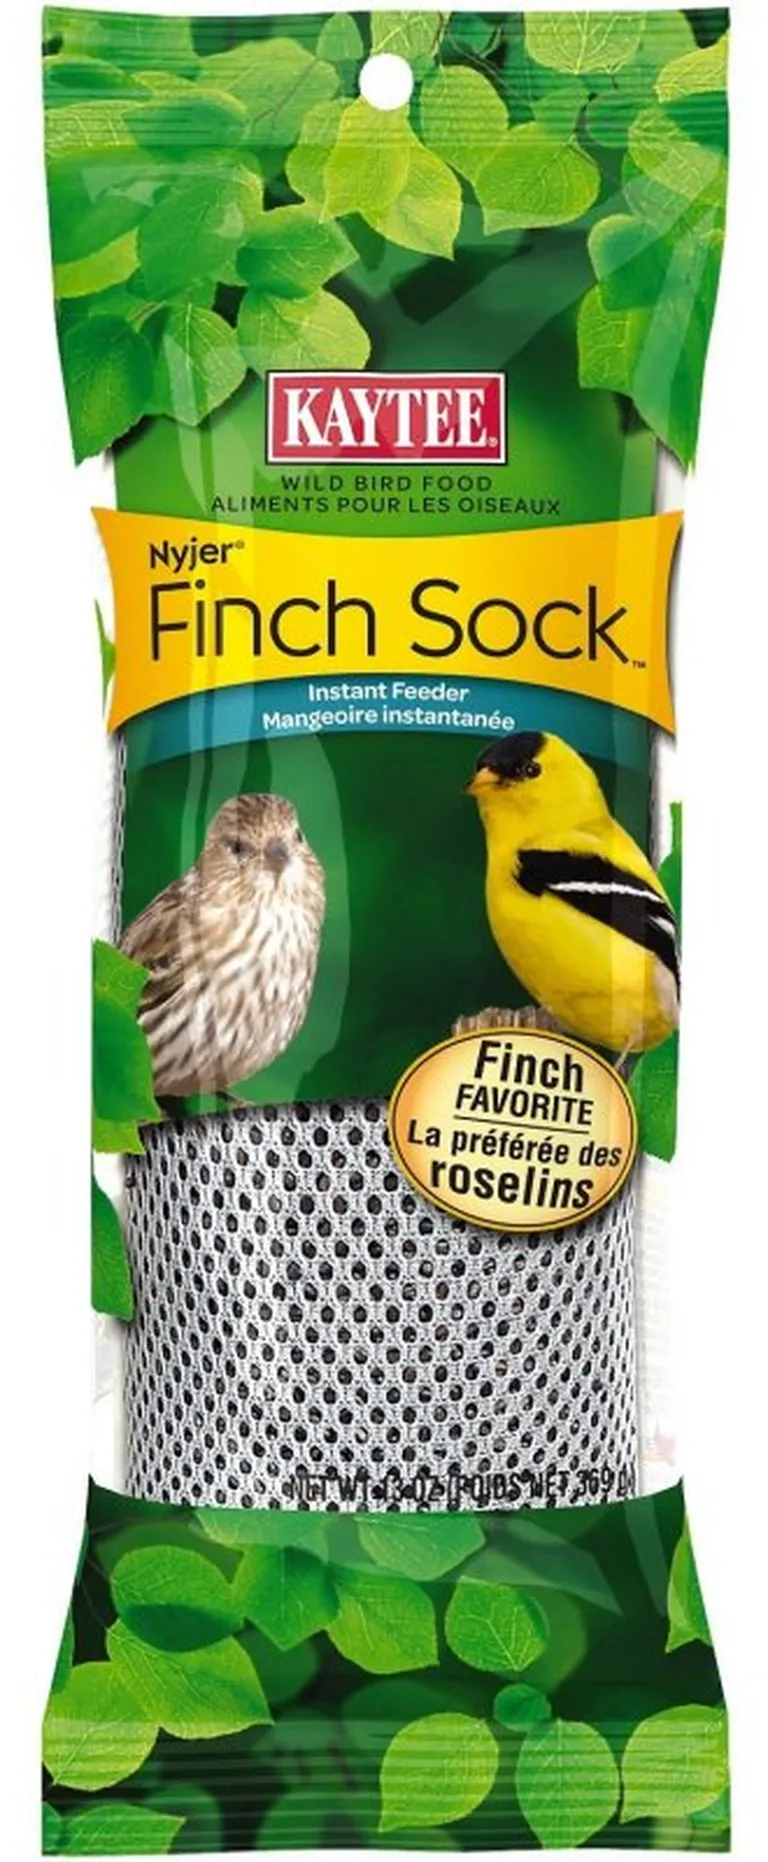 Kaytee Finch Sock Instant Feeder Photo 1